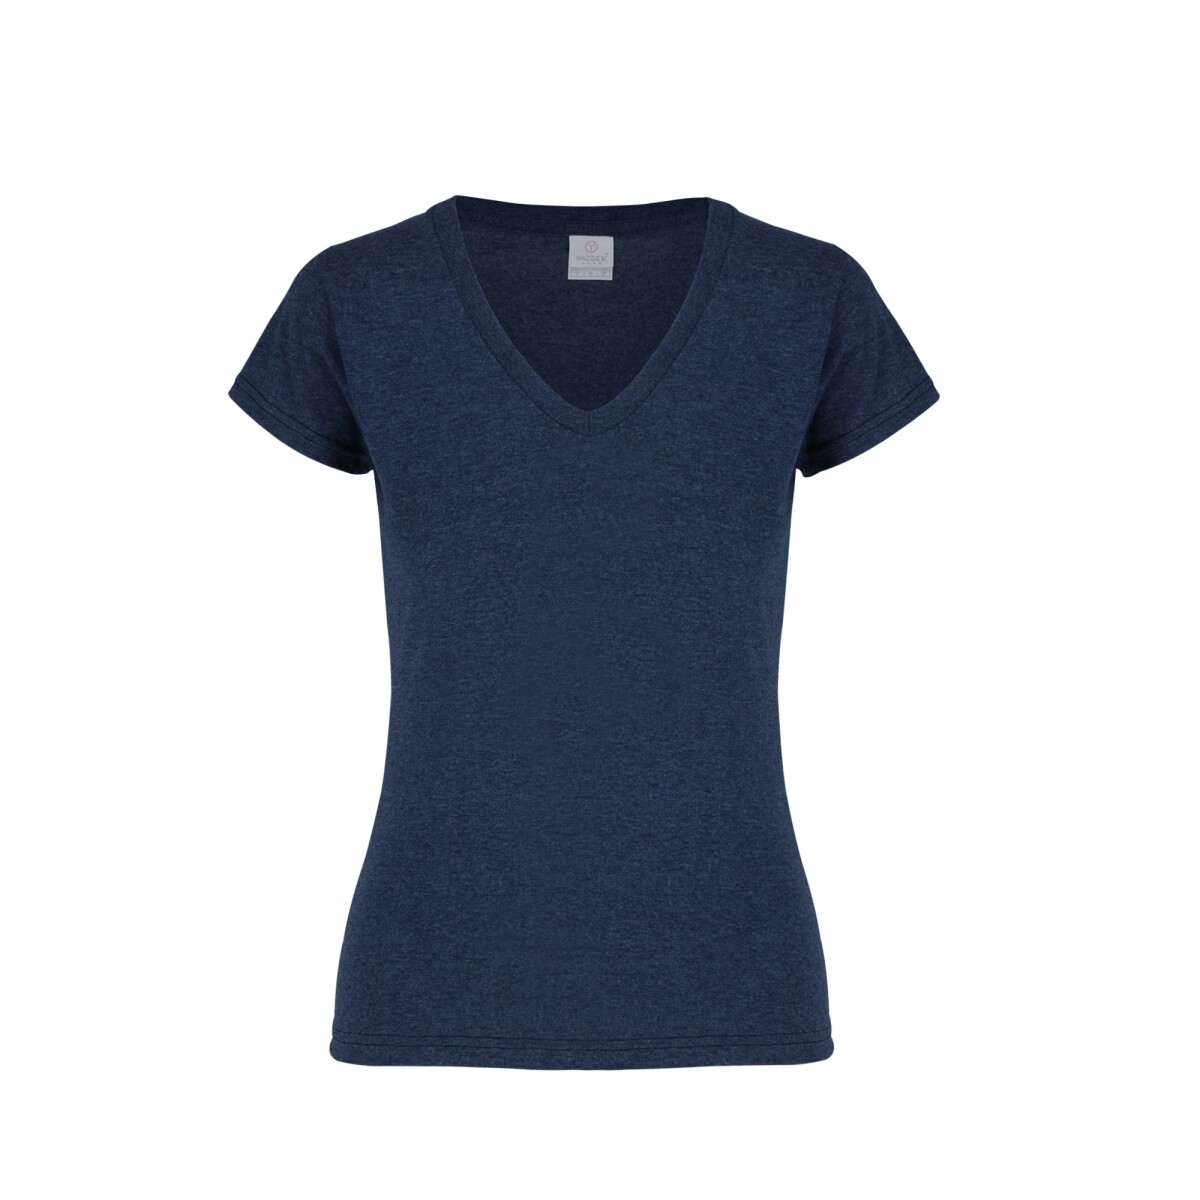 Camiseta jaspe escote en v dama - Azul marino 